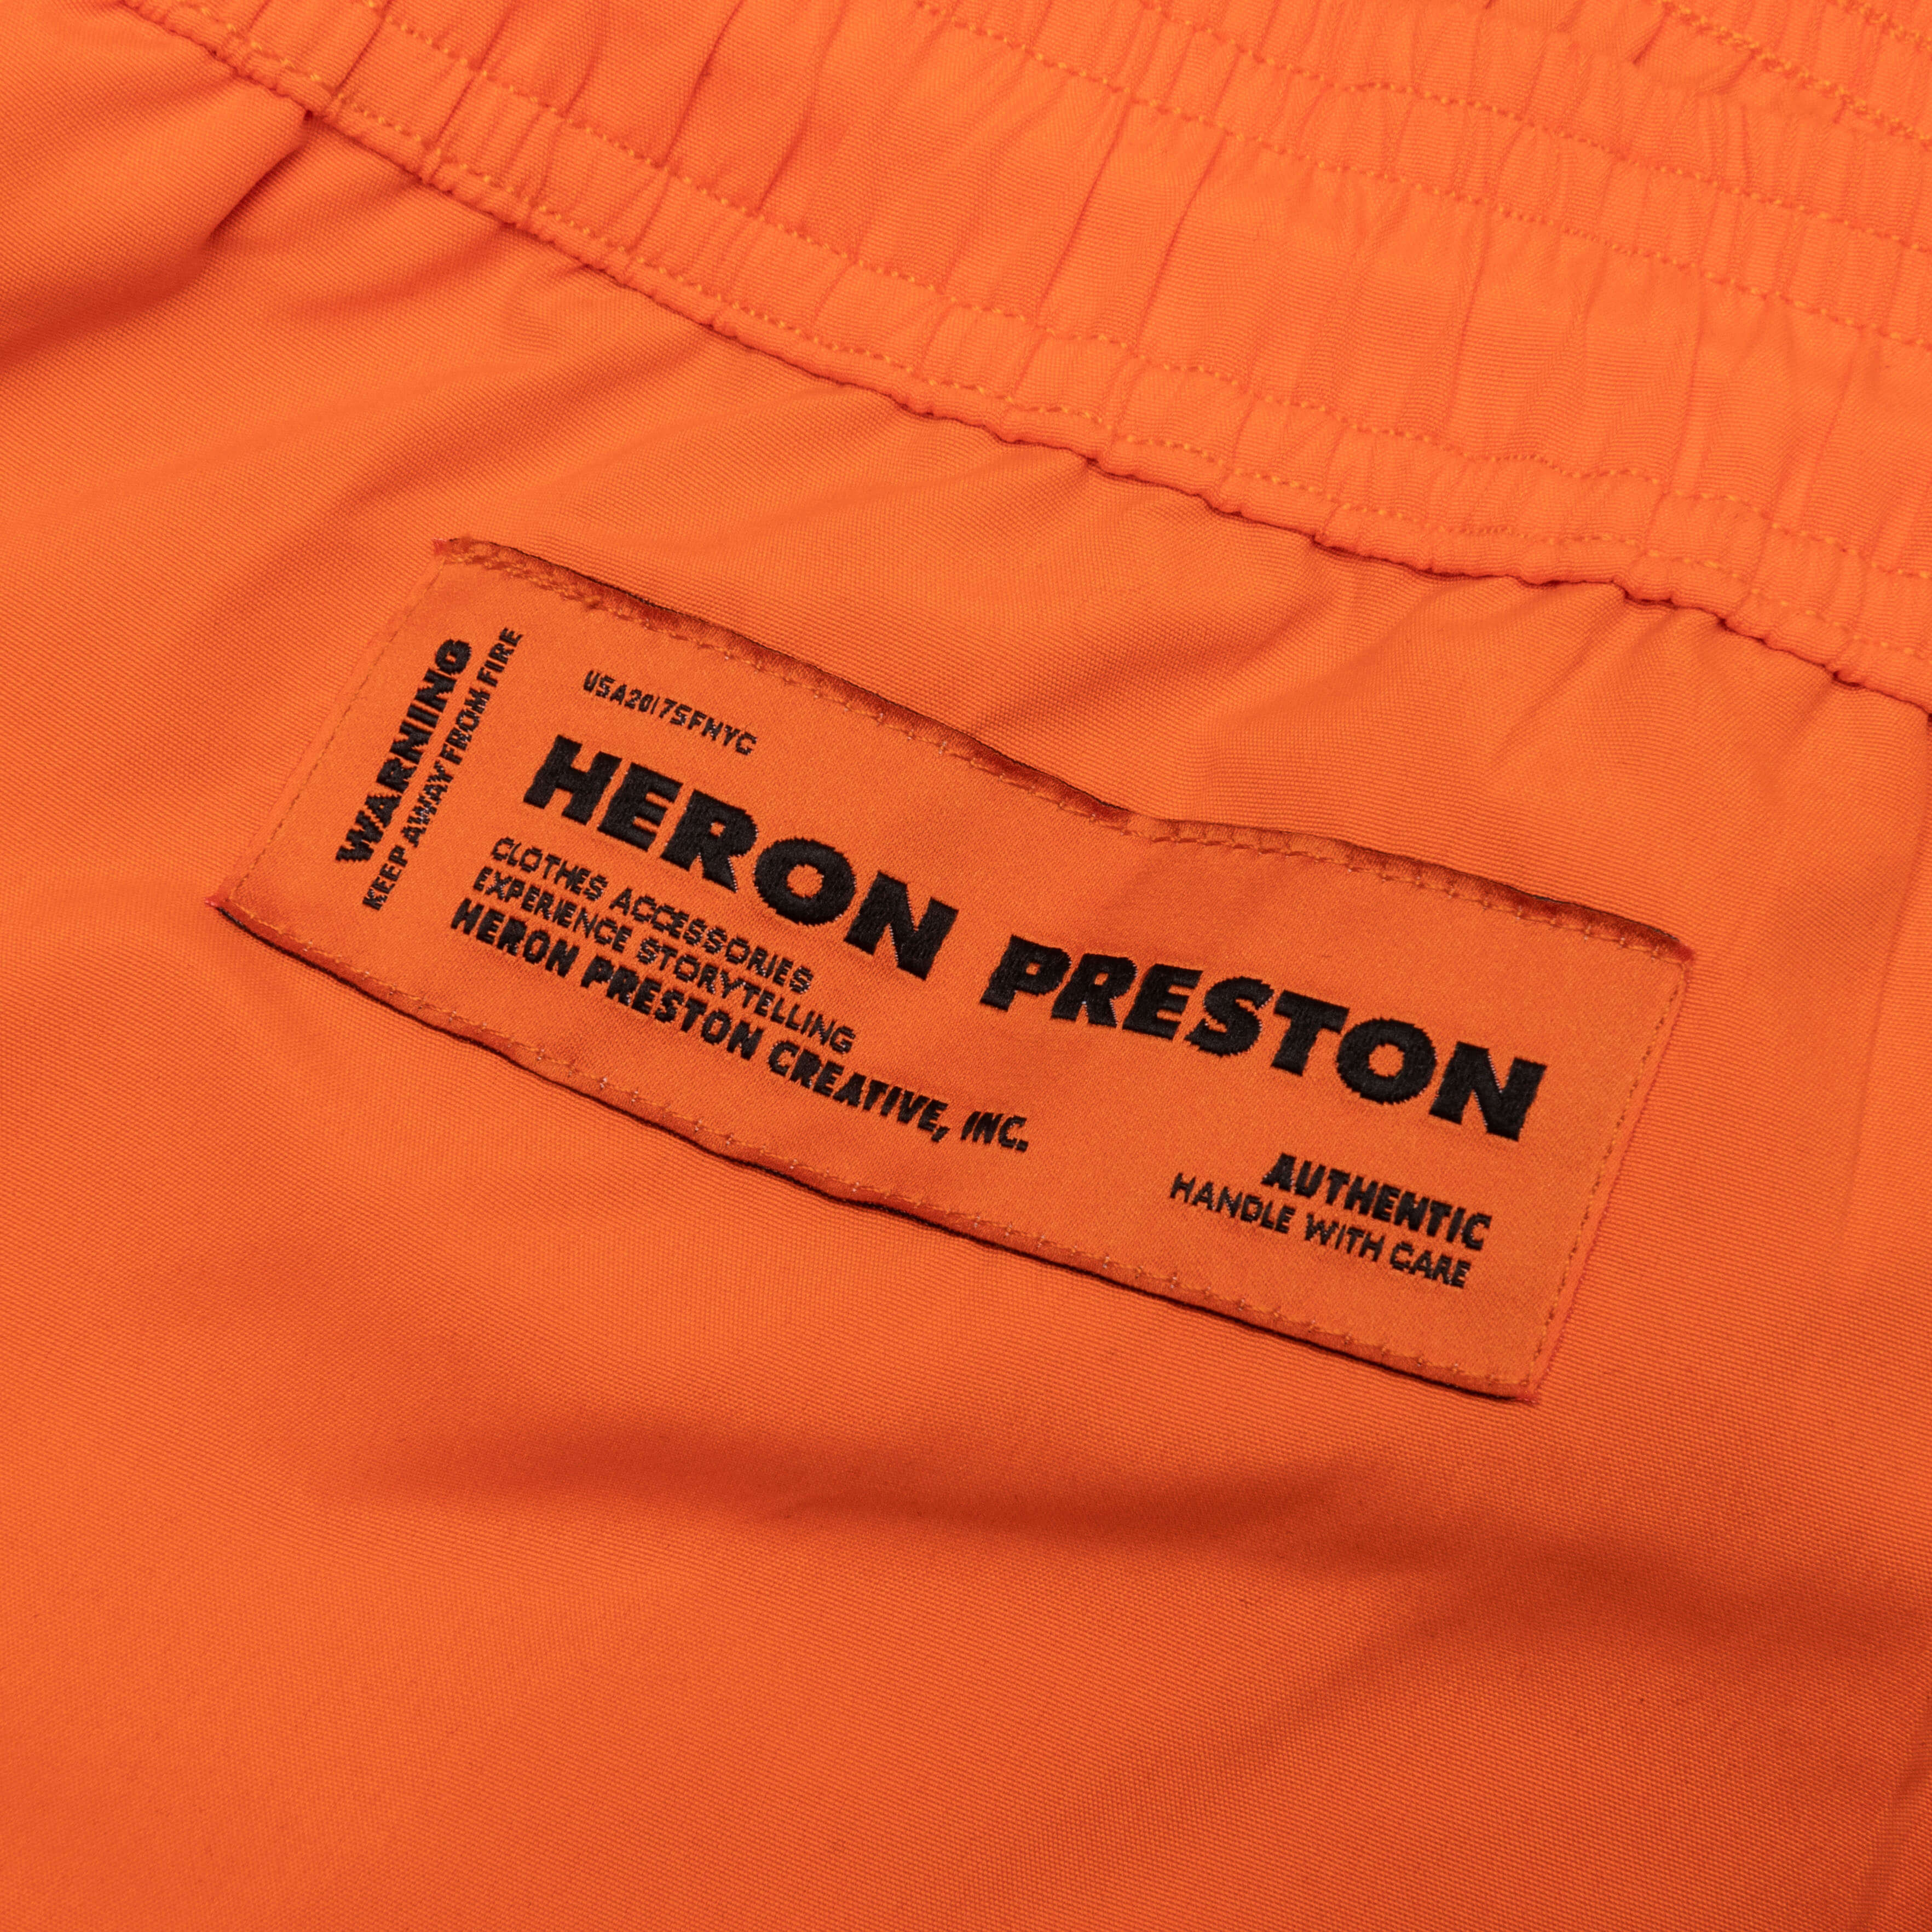 Nylon Swimshorts - Orange/No Color